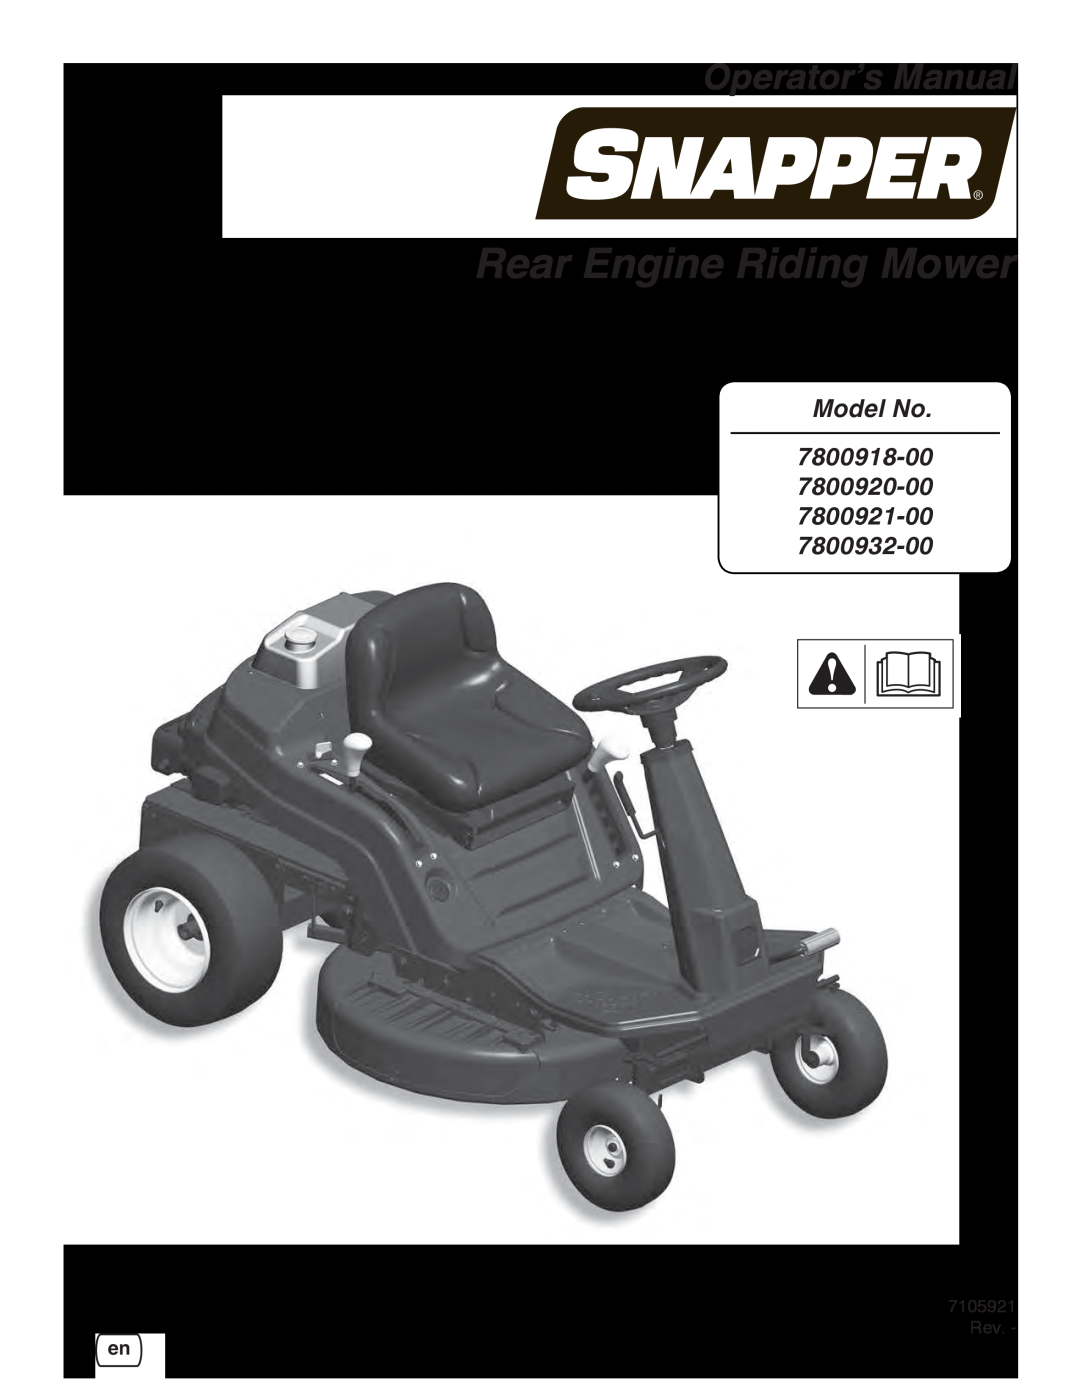 Snapper 7800932-00 manual Reproduction, Rear Engine Riding Mower, Model No 7800918-00 7800920-00, Operator’s Manual 